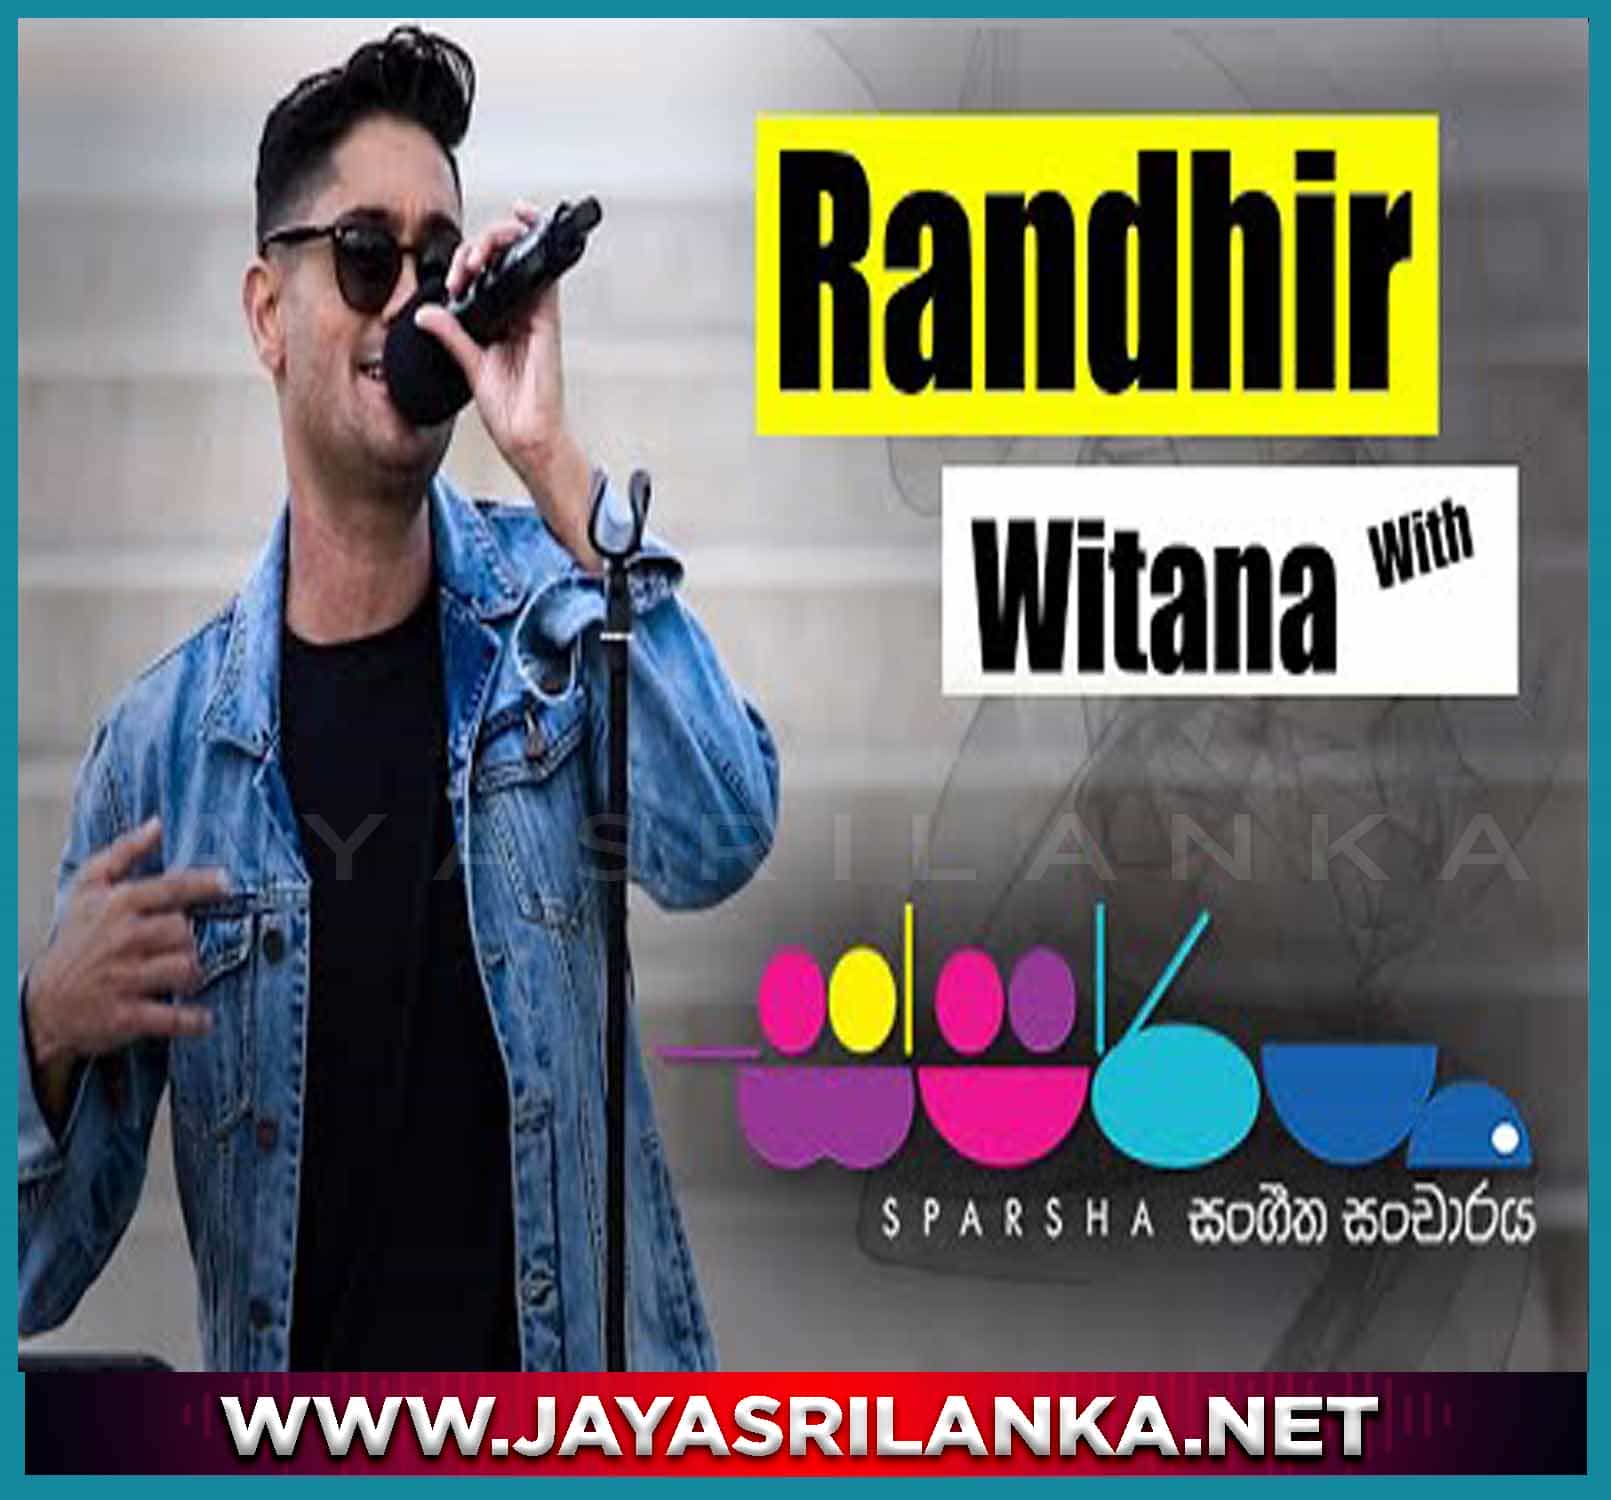 Sparsha With Randhir Withana 2023-02-10 